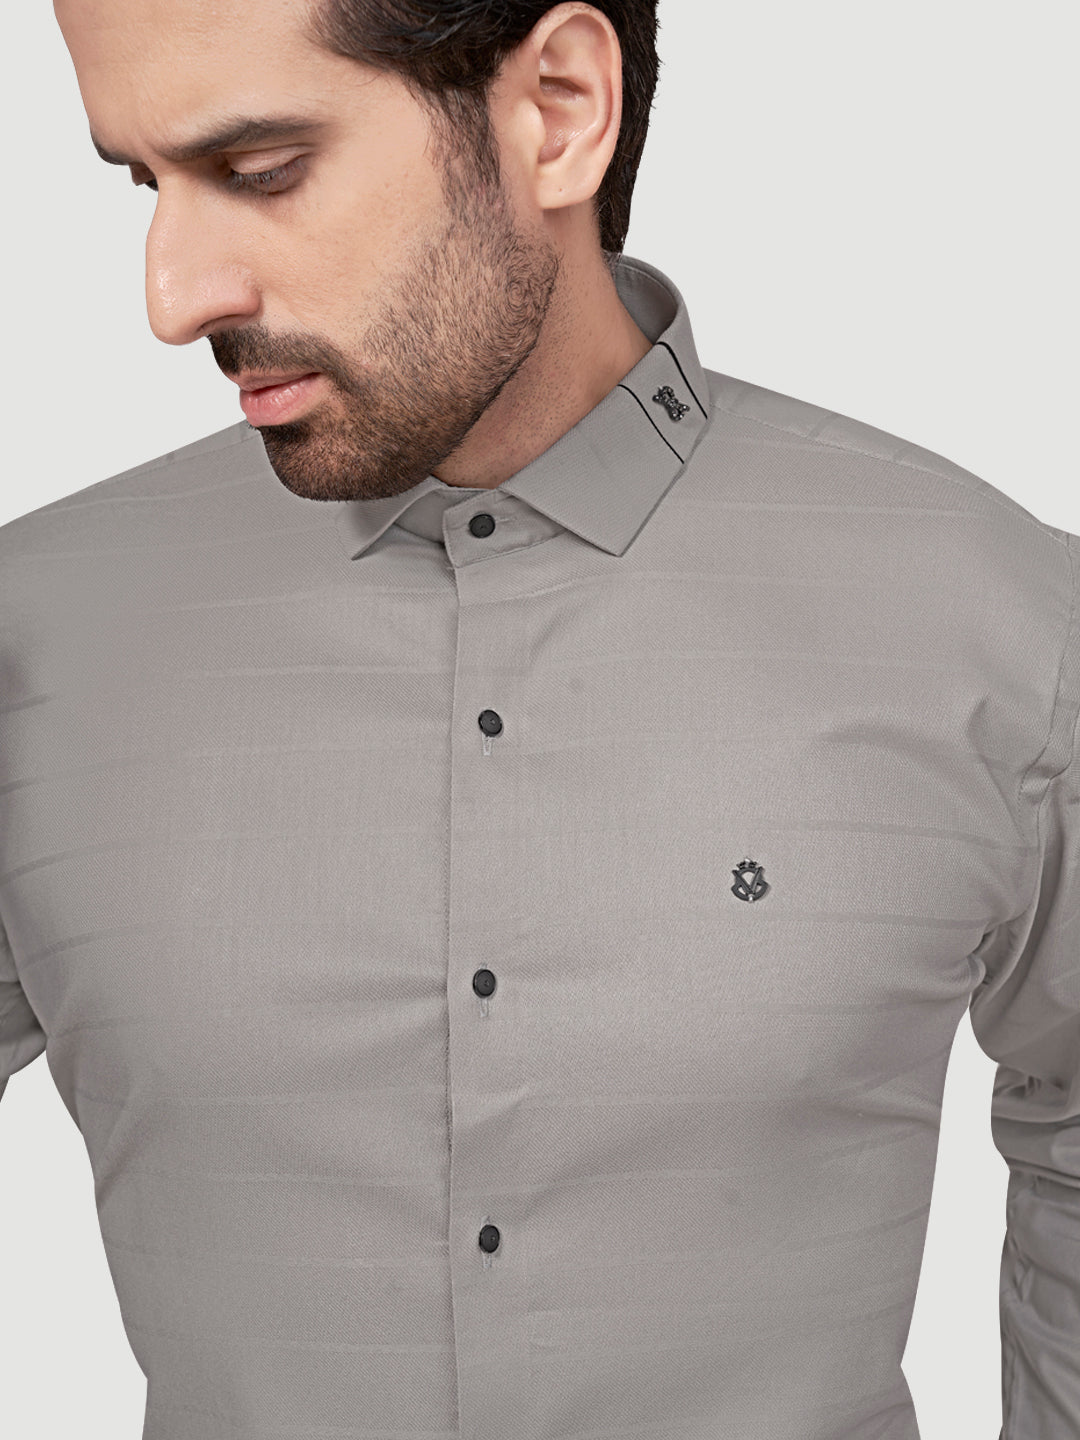 Black and White Men's Designer Shirt with Collar Accessory & Designer Broach Grey